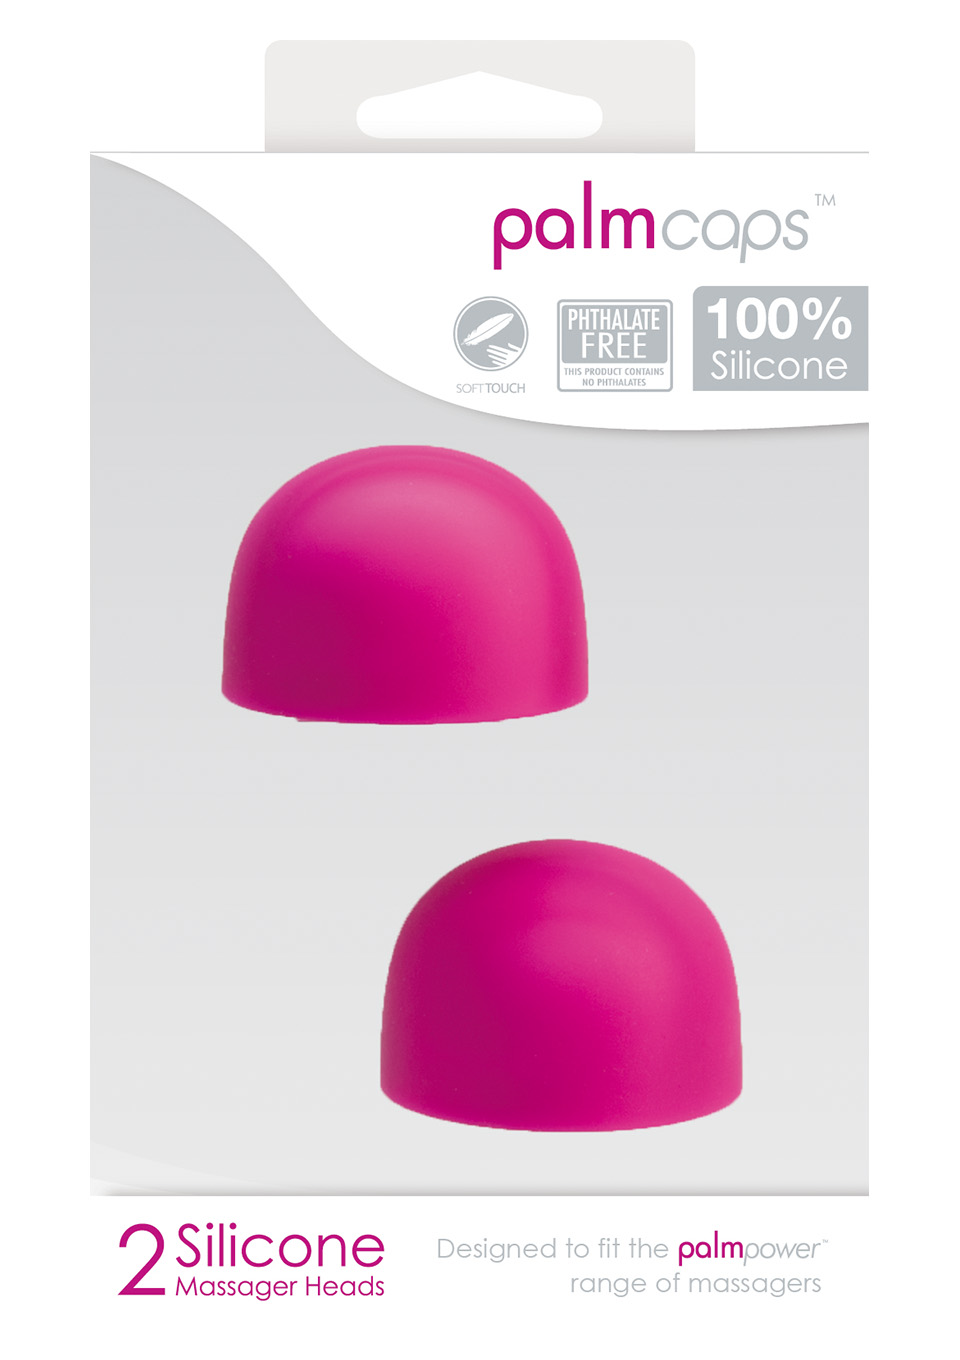 Palm Caps